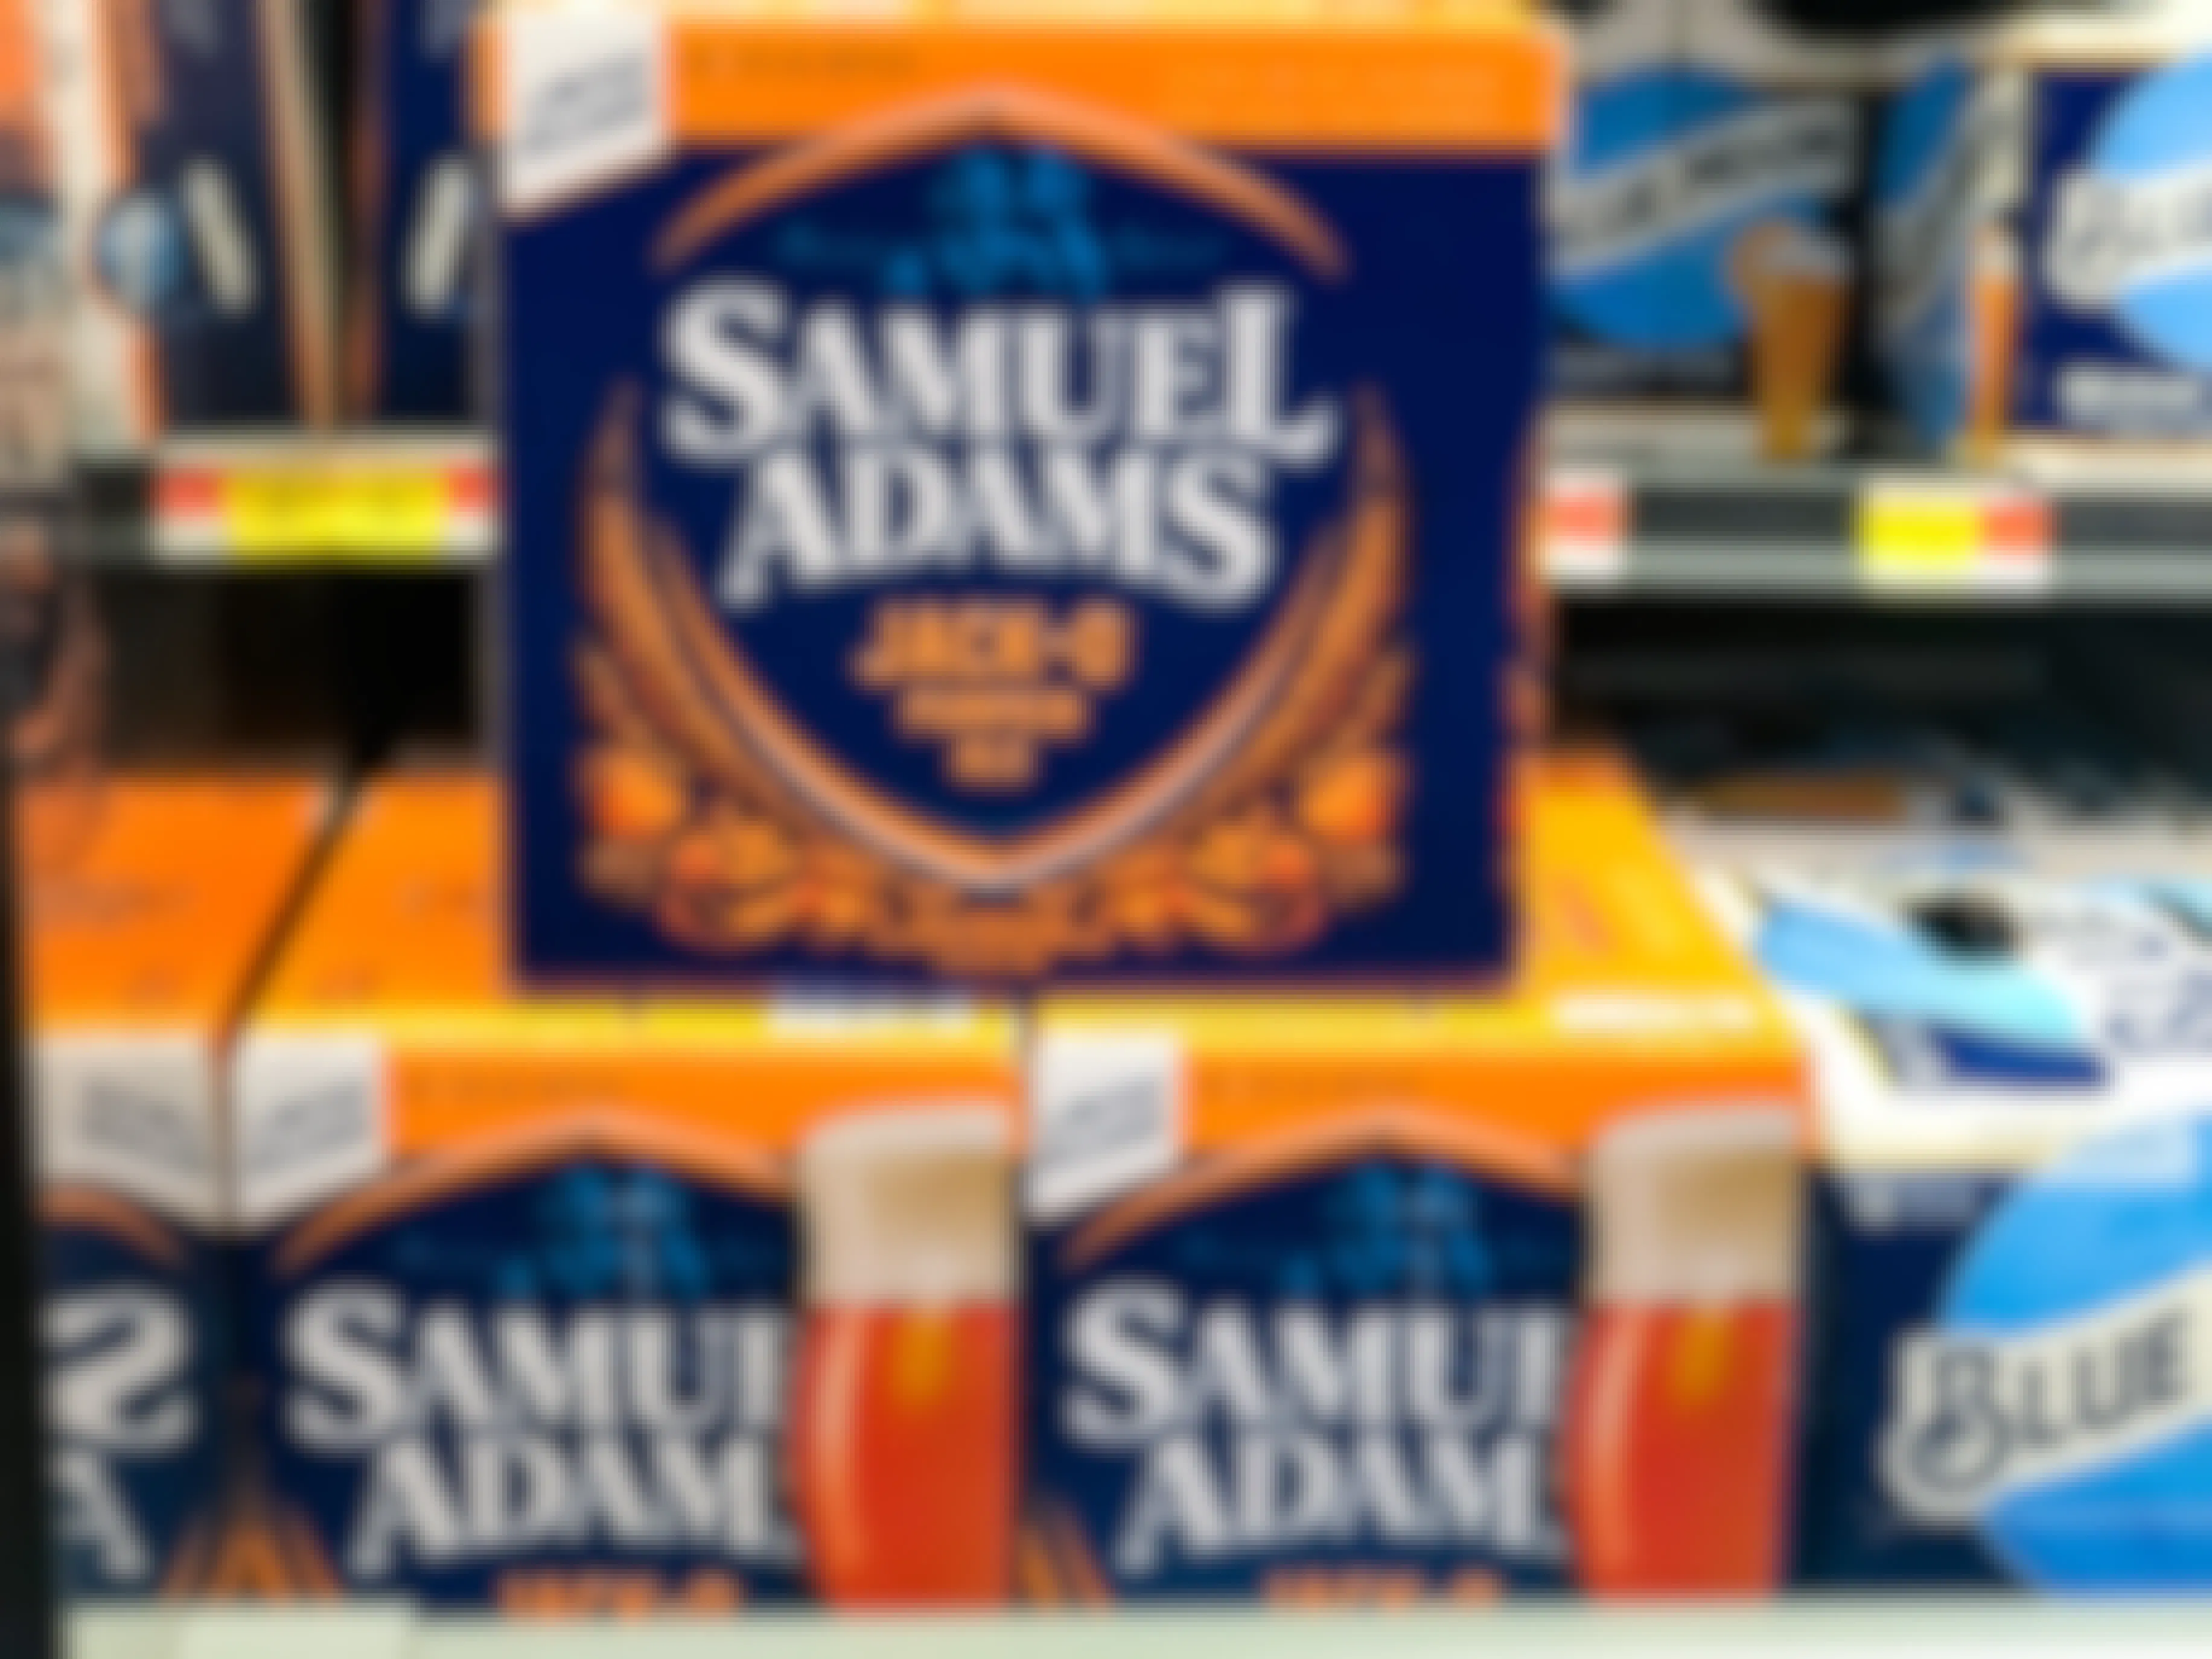 Samuel adams pumpkin ale on shelf